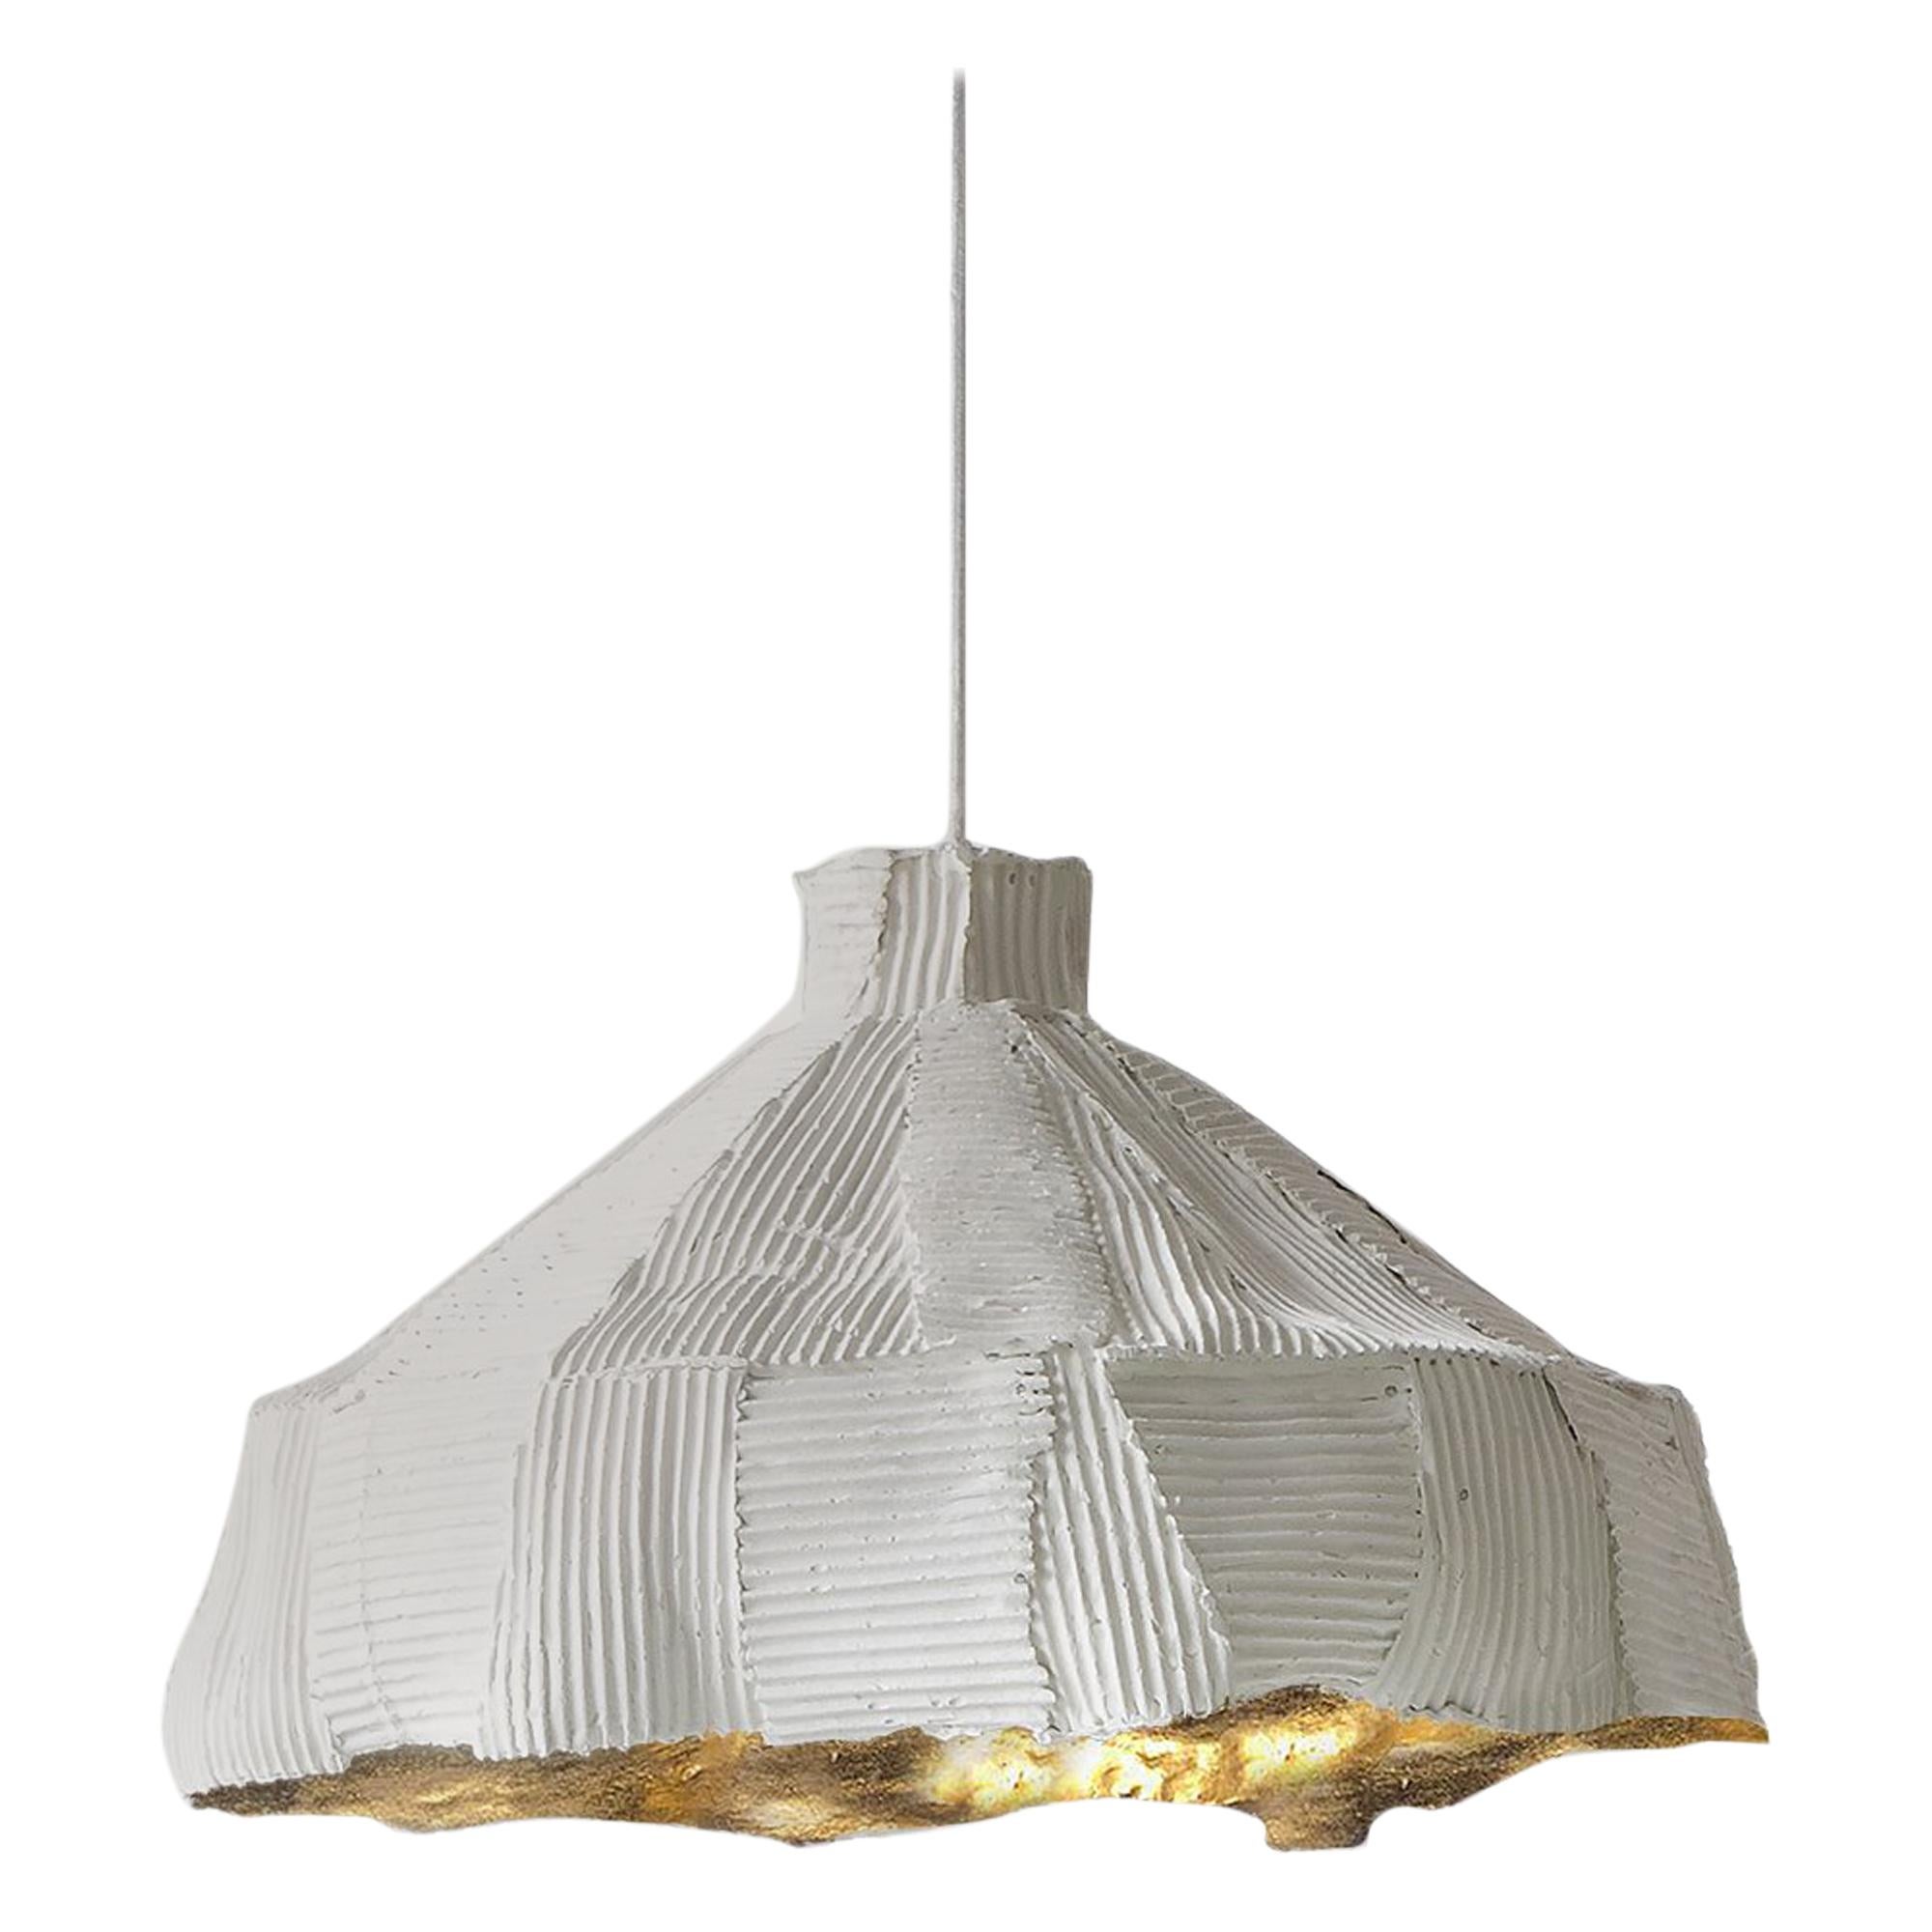 Contemporary Ceramic Anemone Lamp Cartoccio Texture White and Gold Inside For Sale